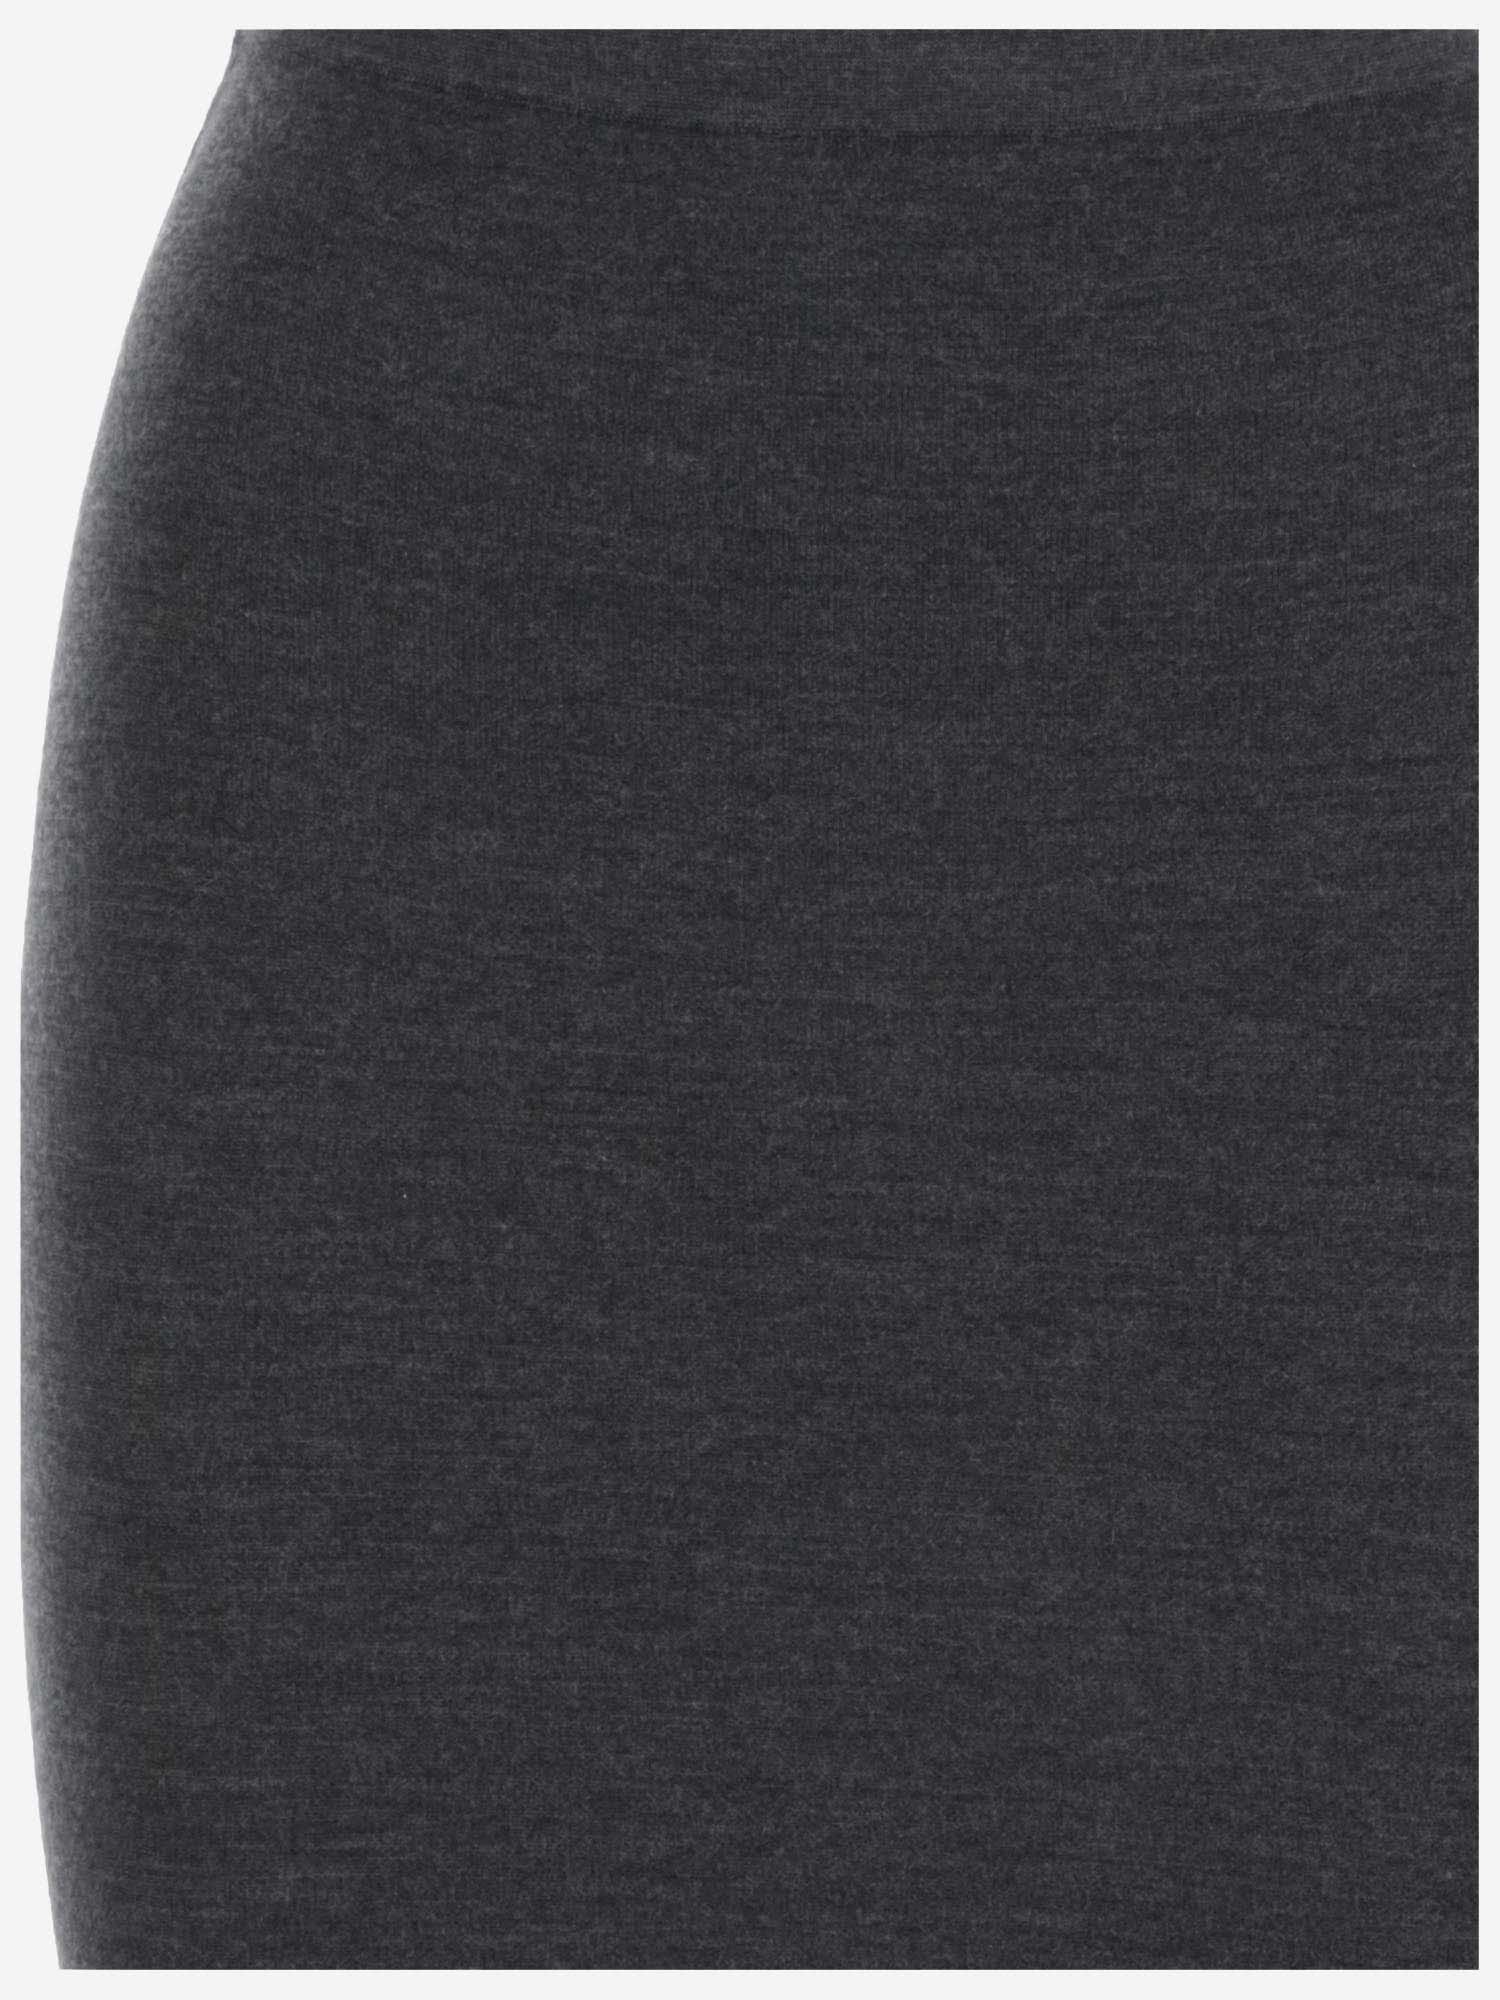 Shop Saint Laurent Cashmere Wool And Silk Pencil Skirt In Black